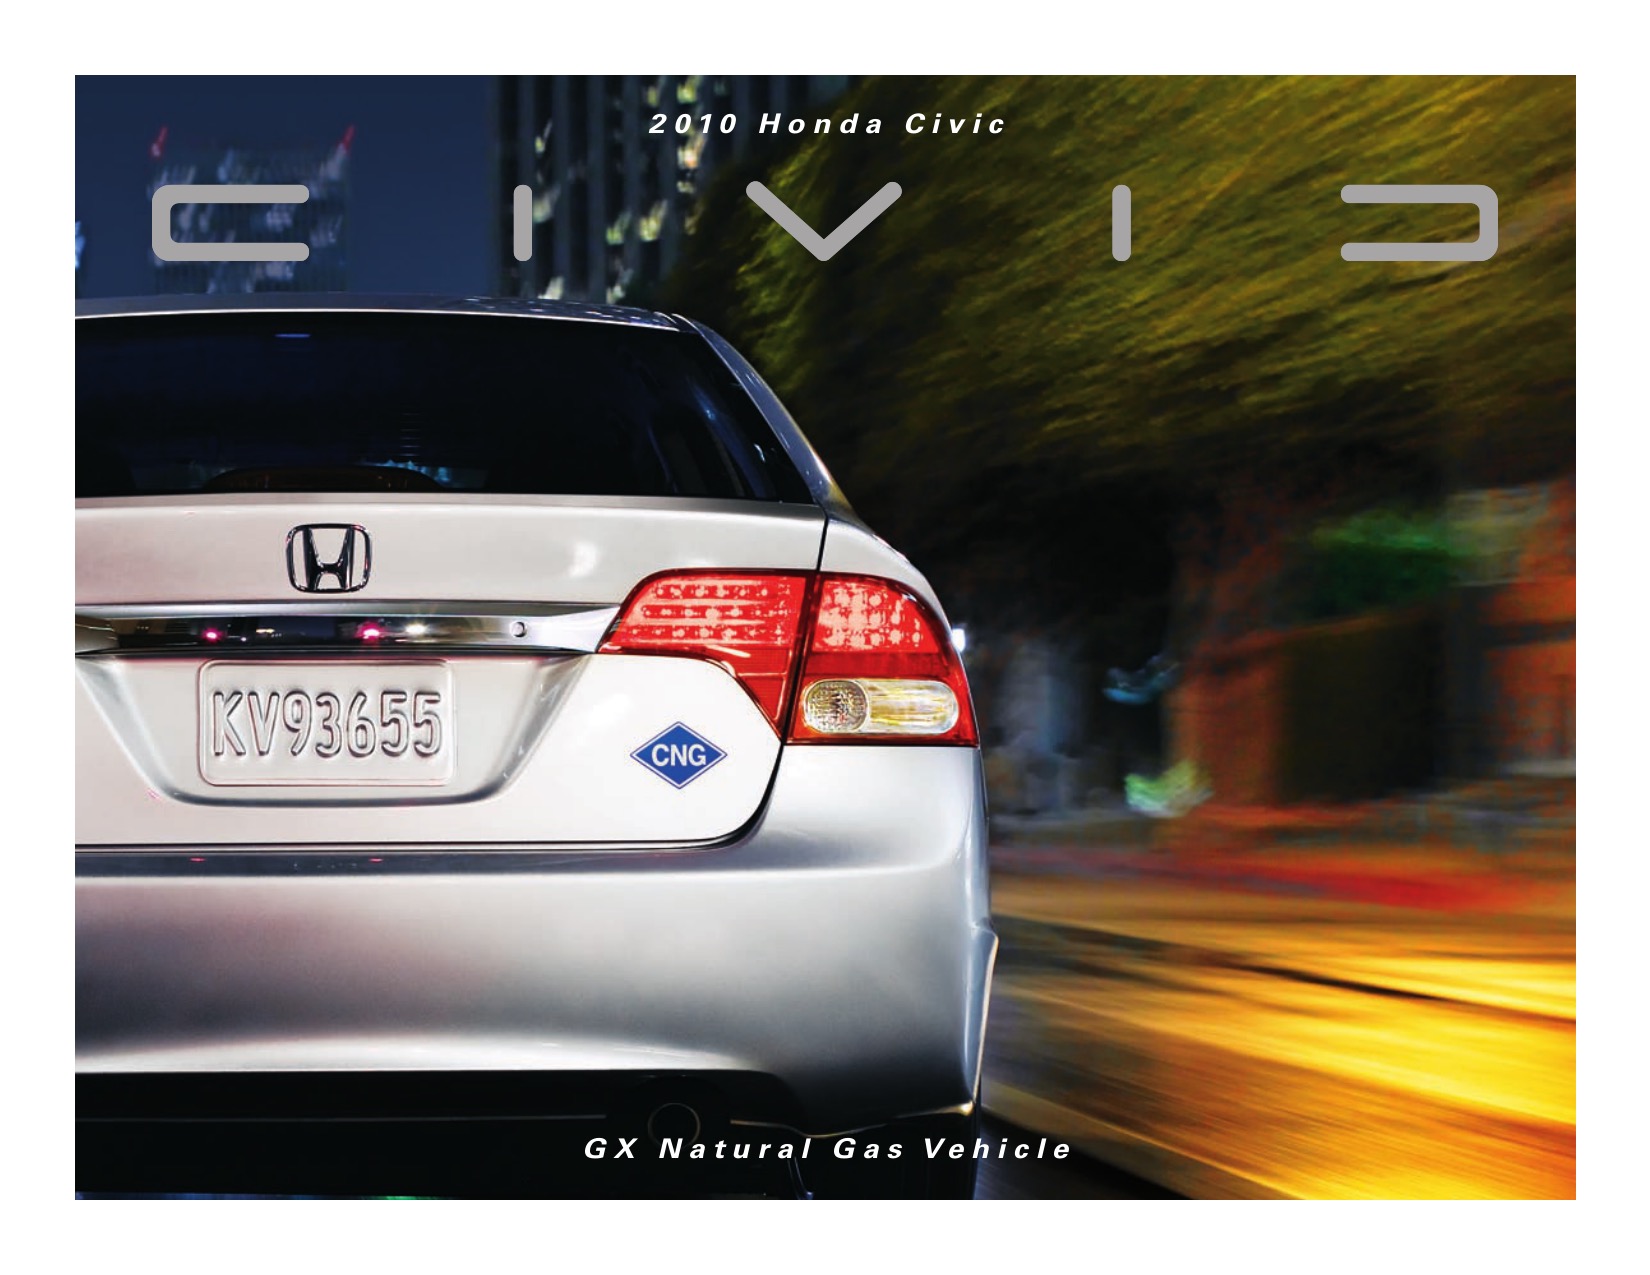 2010 Honda Civic GX Brochure